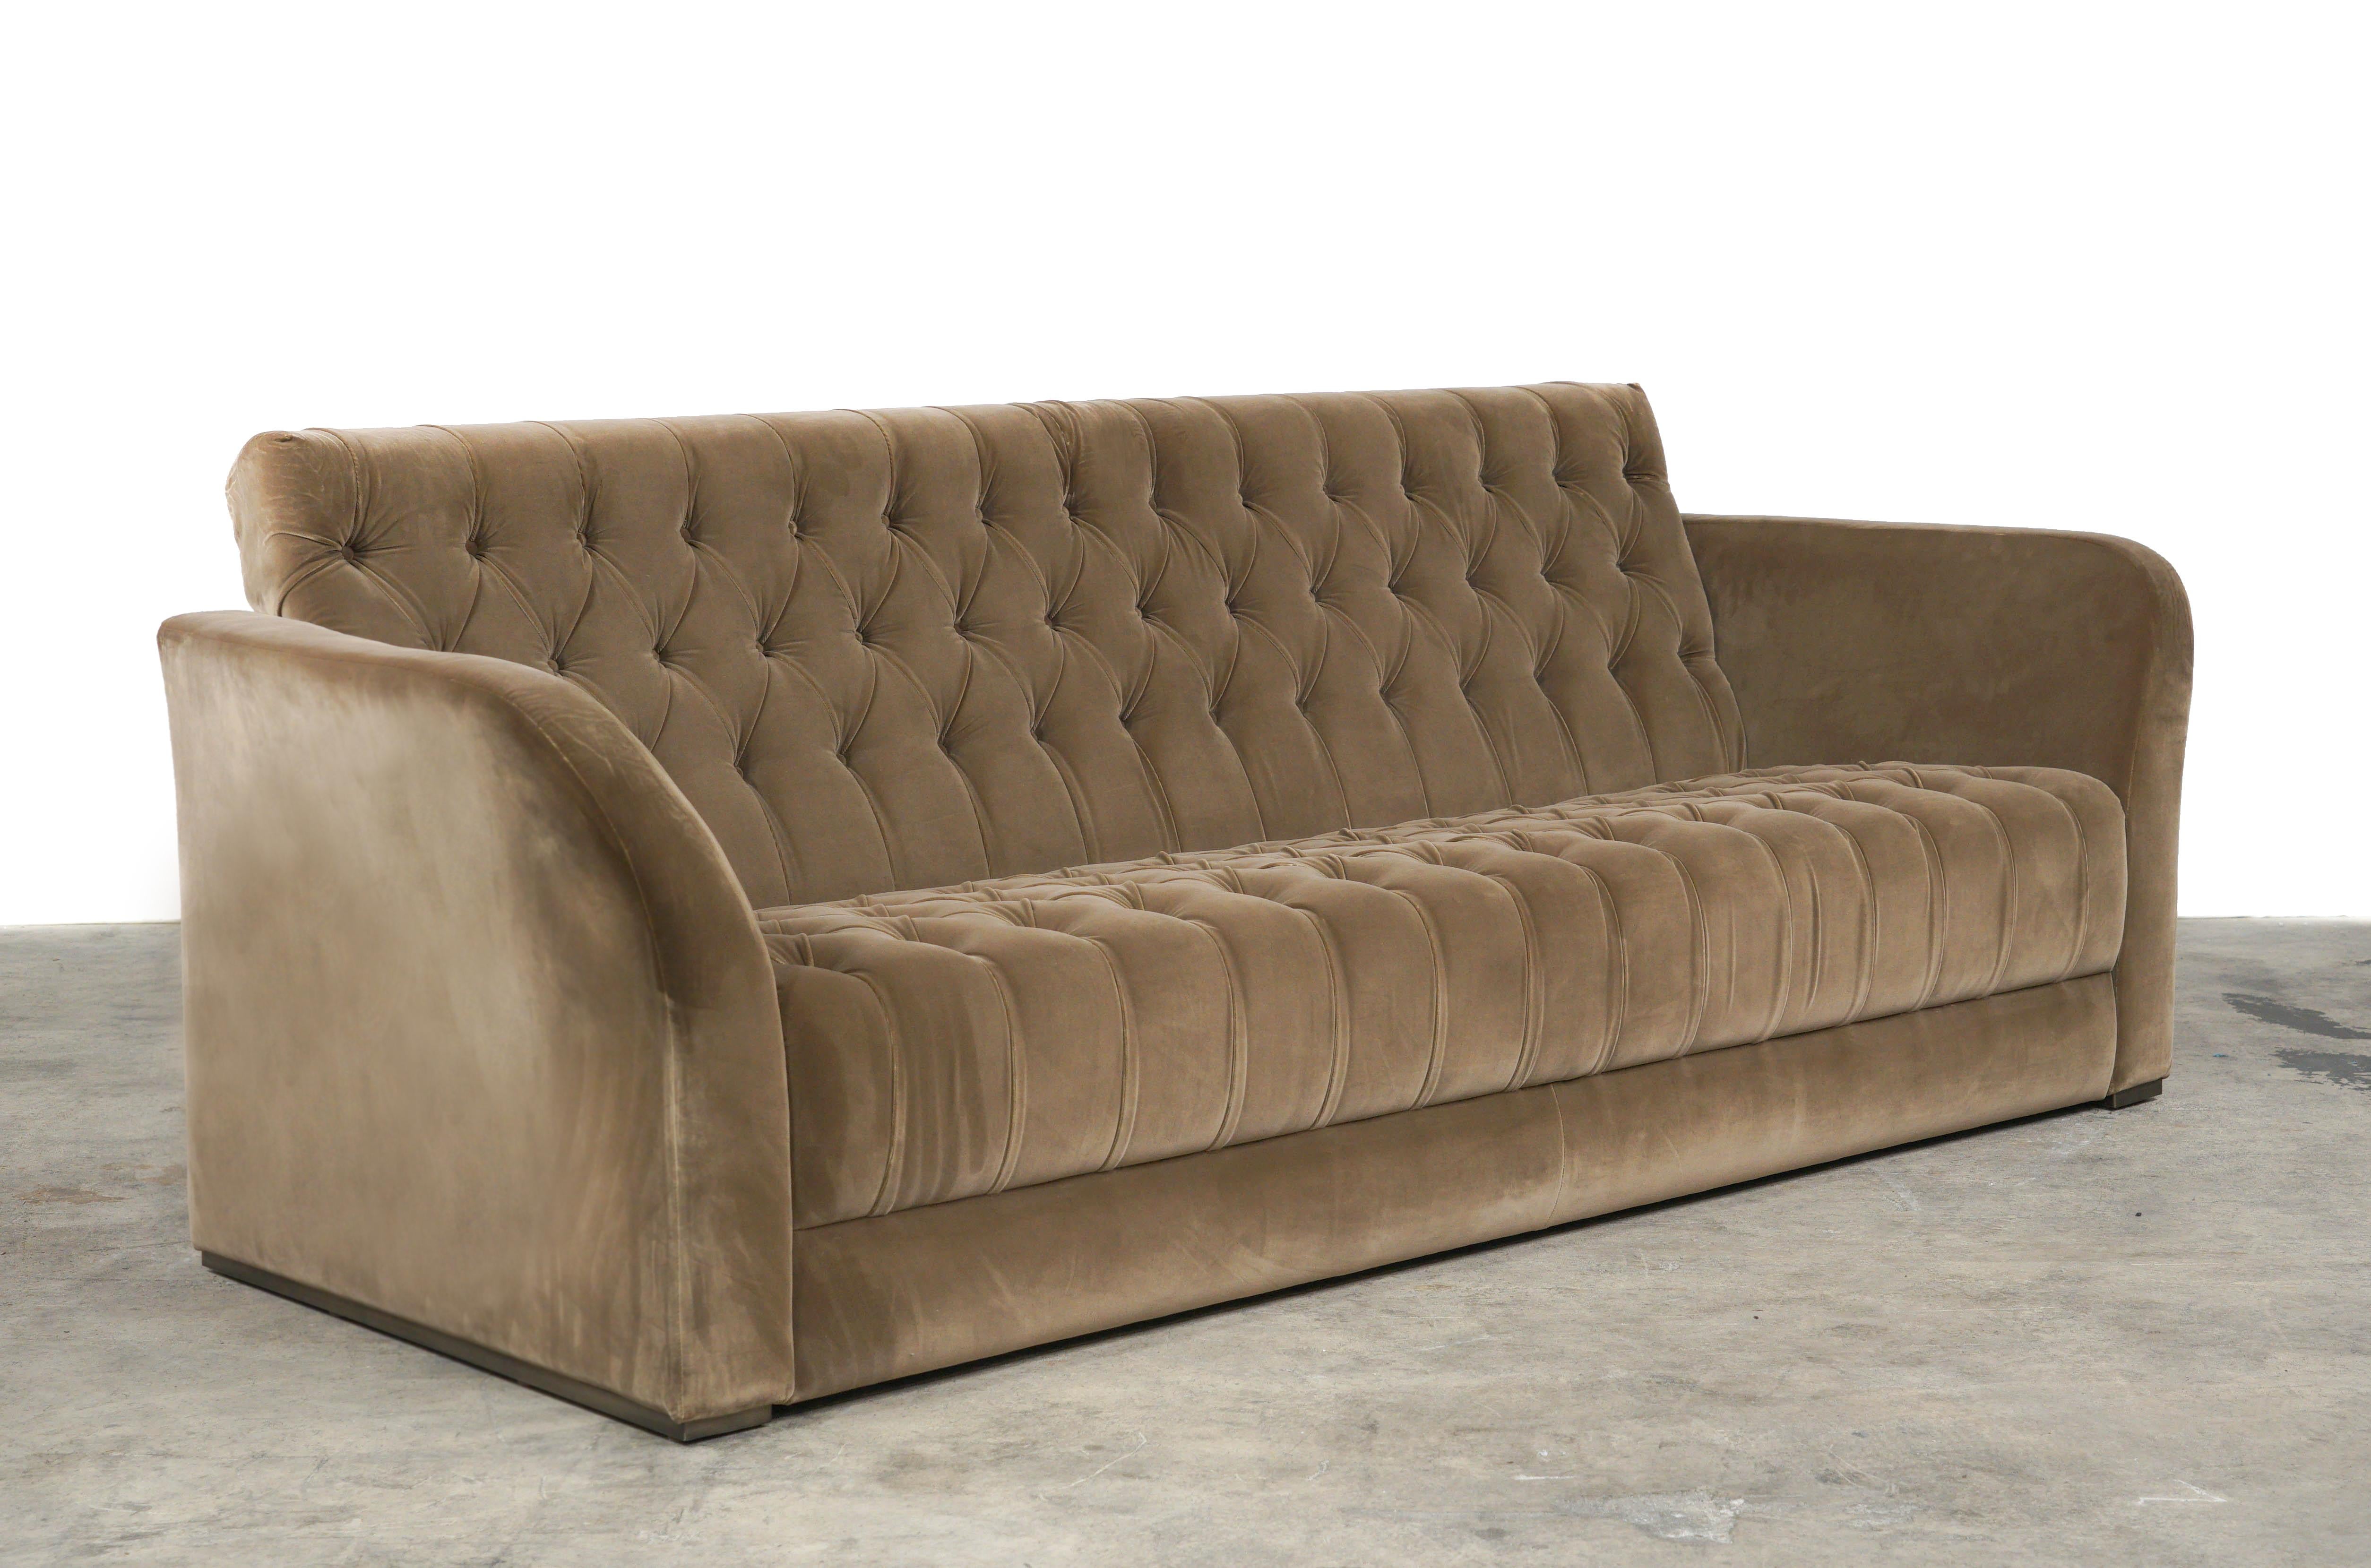 Italian Heritage Collection Rivoli 3-Seat Sofa For Sale